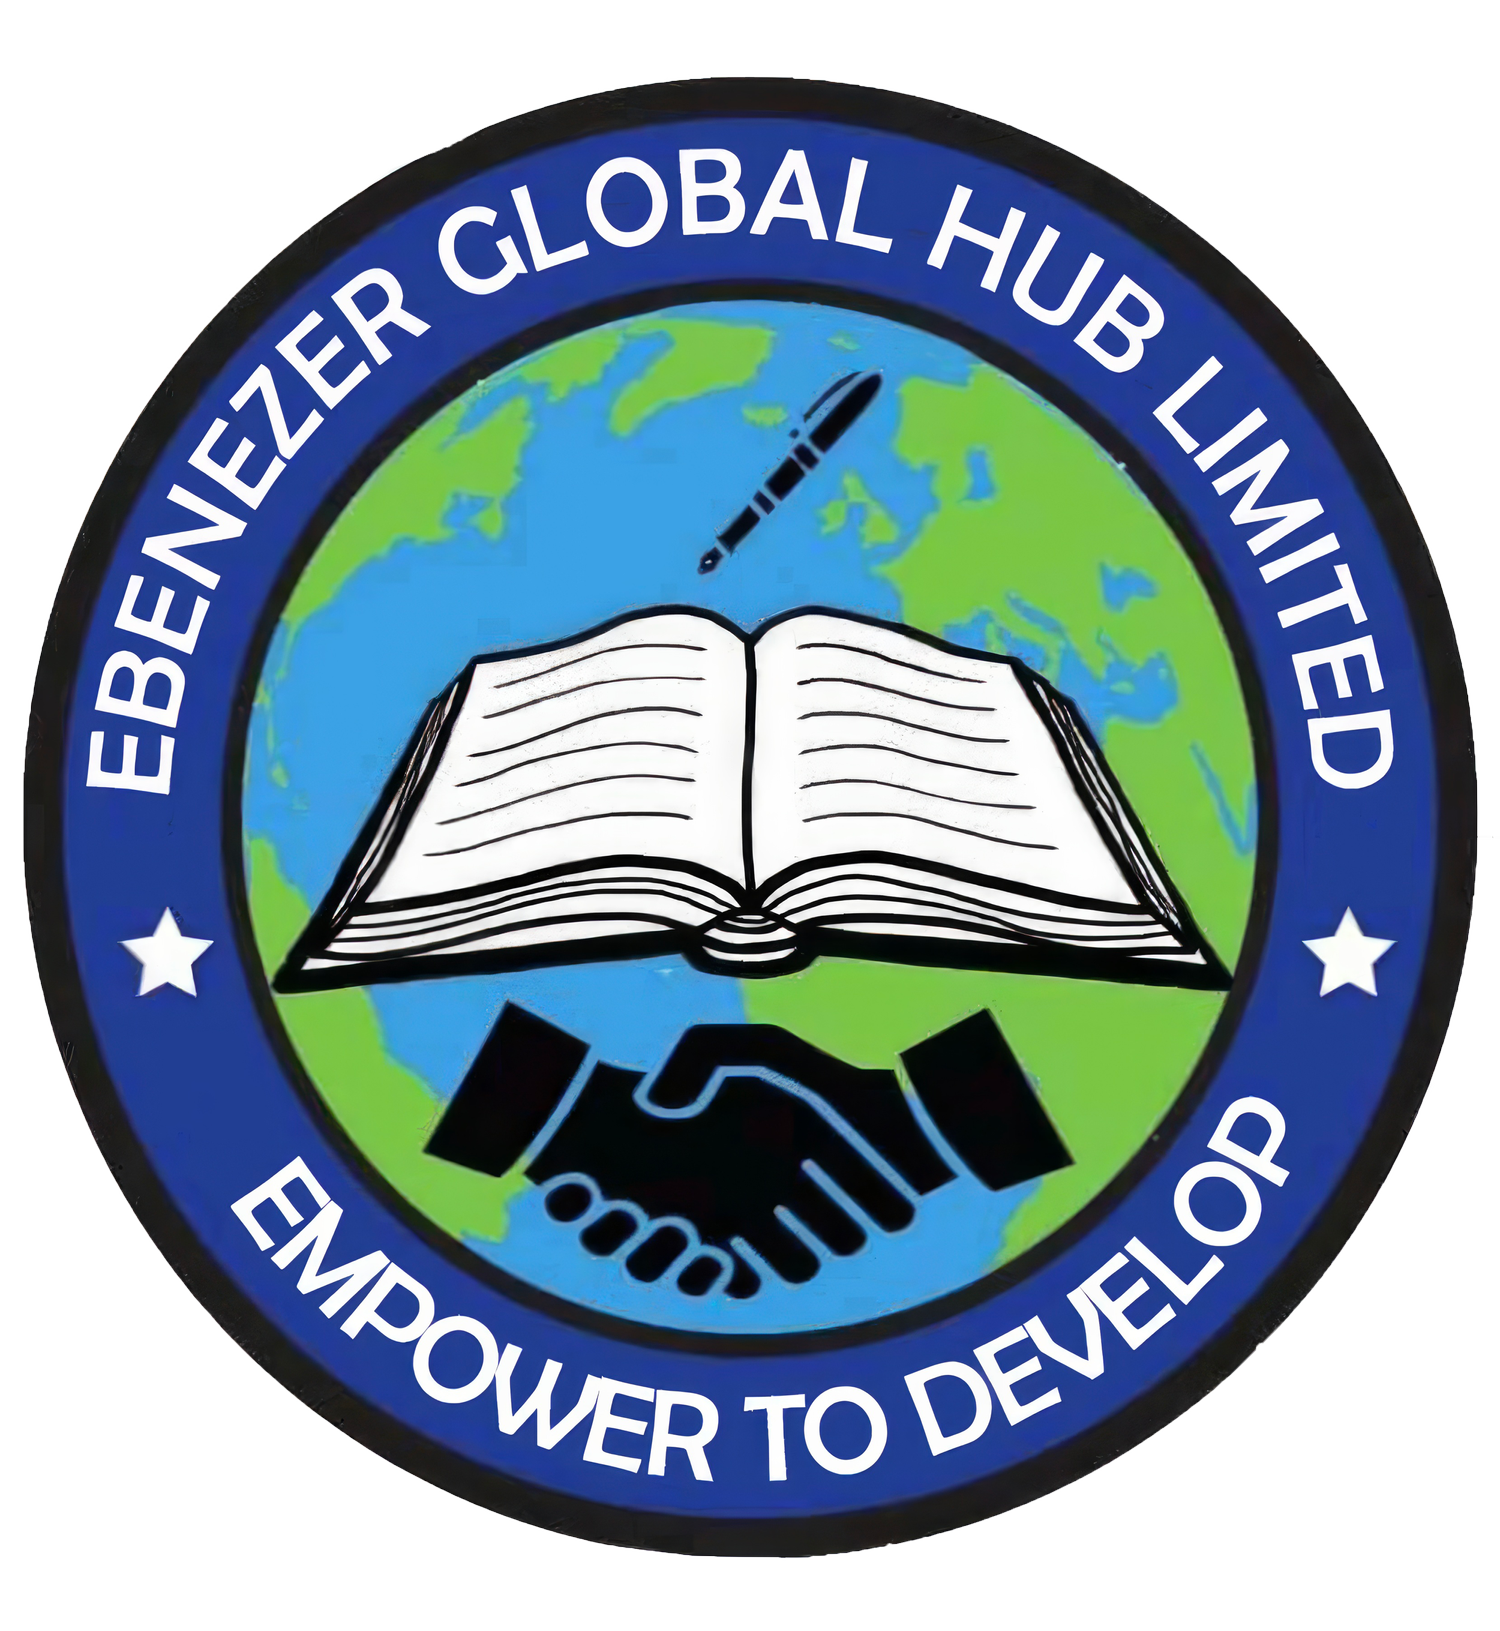 Ebenezer Global Hub